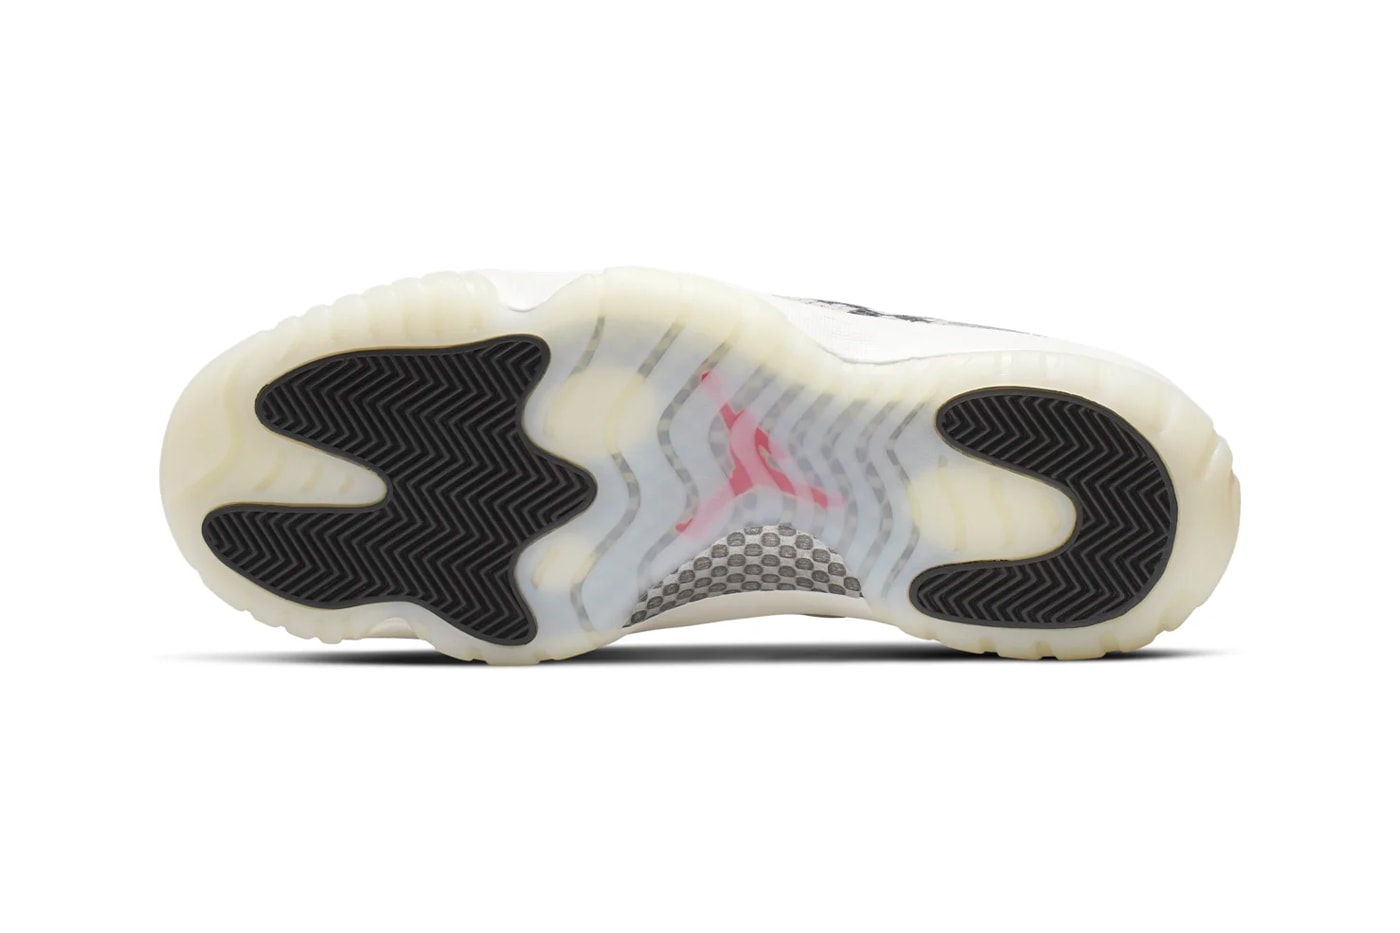 Air Jordan 11 Low Light Bone Snakeskin grey white black cream off tan red jumpman brand sneakers shoes